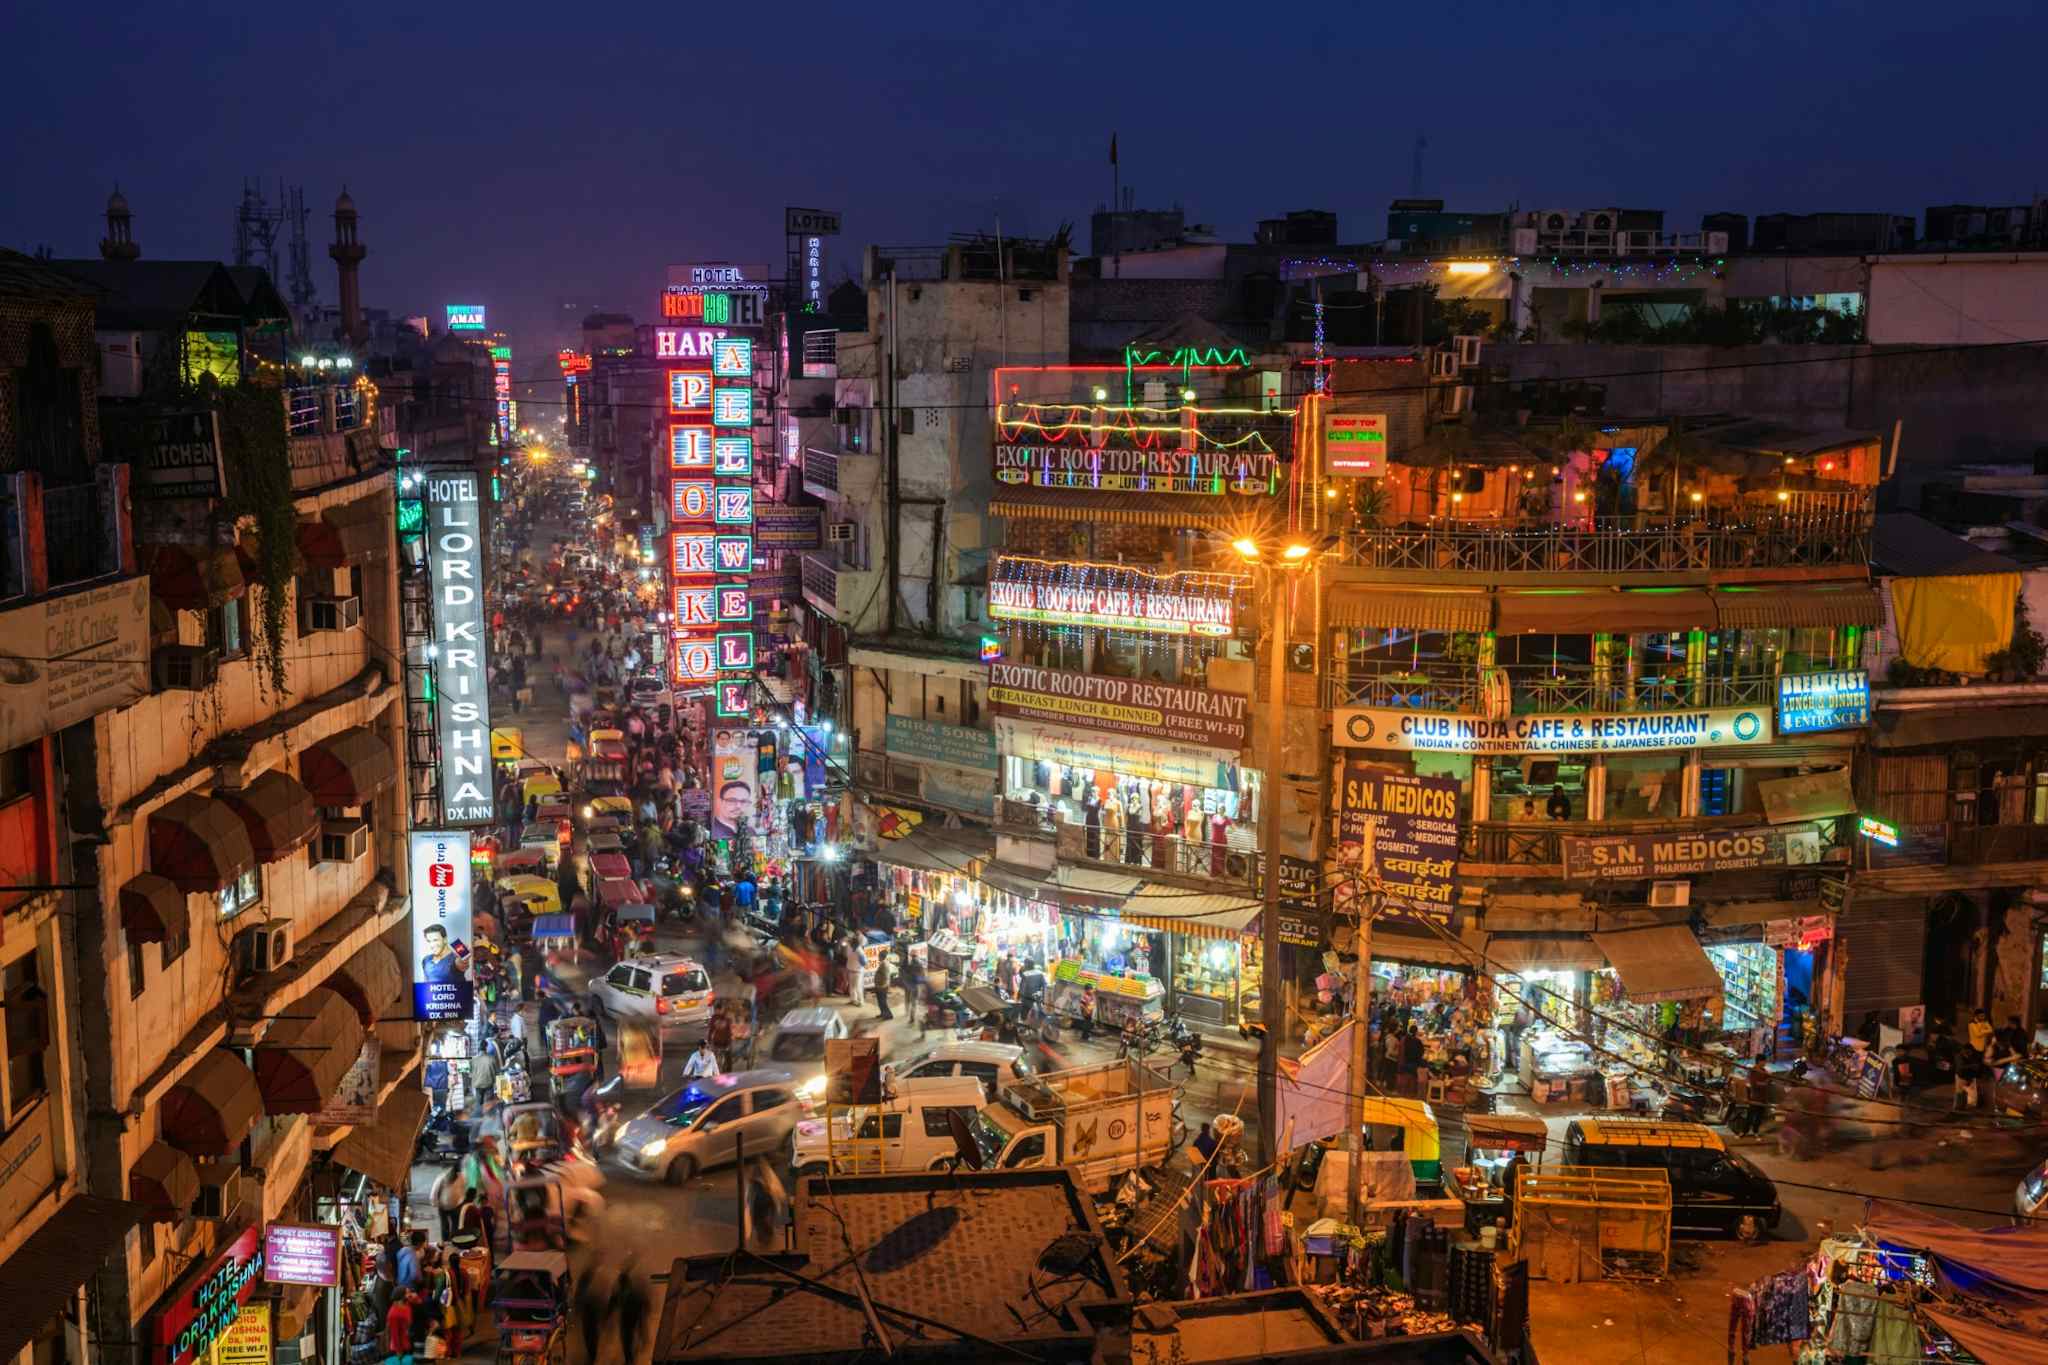 Delhi Streetlife, India - Canva link: https://www.canva.com/photos/MAEELNMG_tQ-city-life-main-bazar-by-night-paharganj-new-delhi-india/